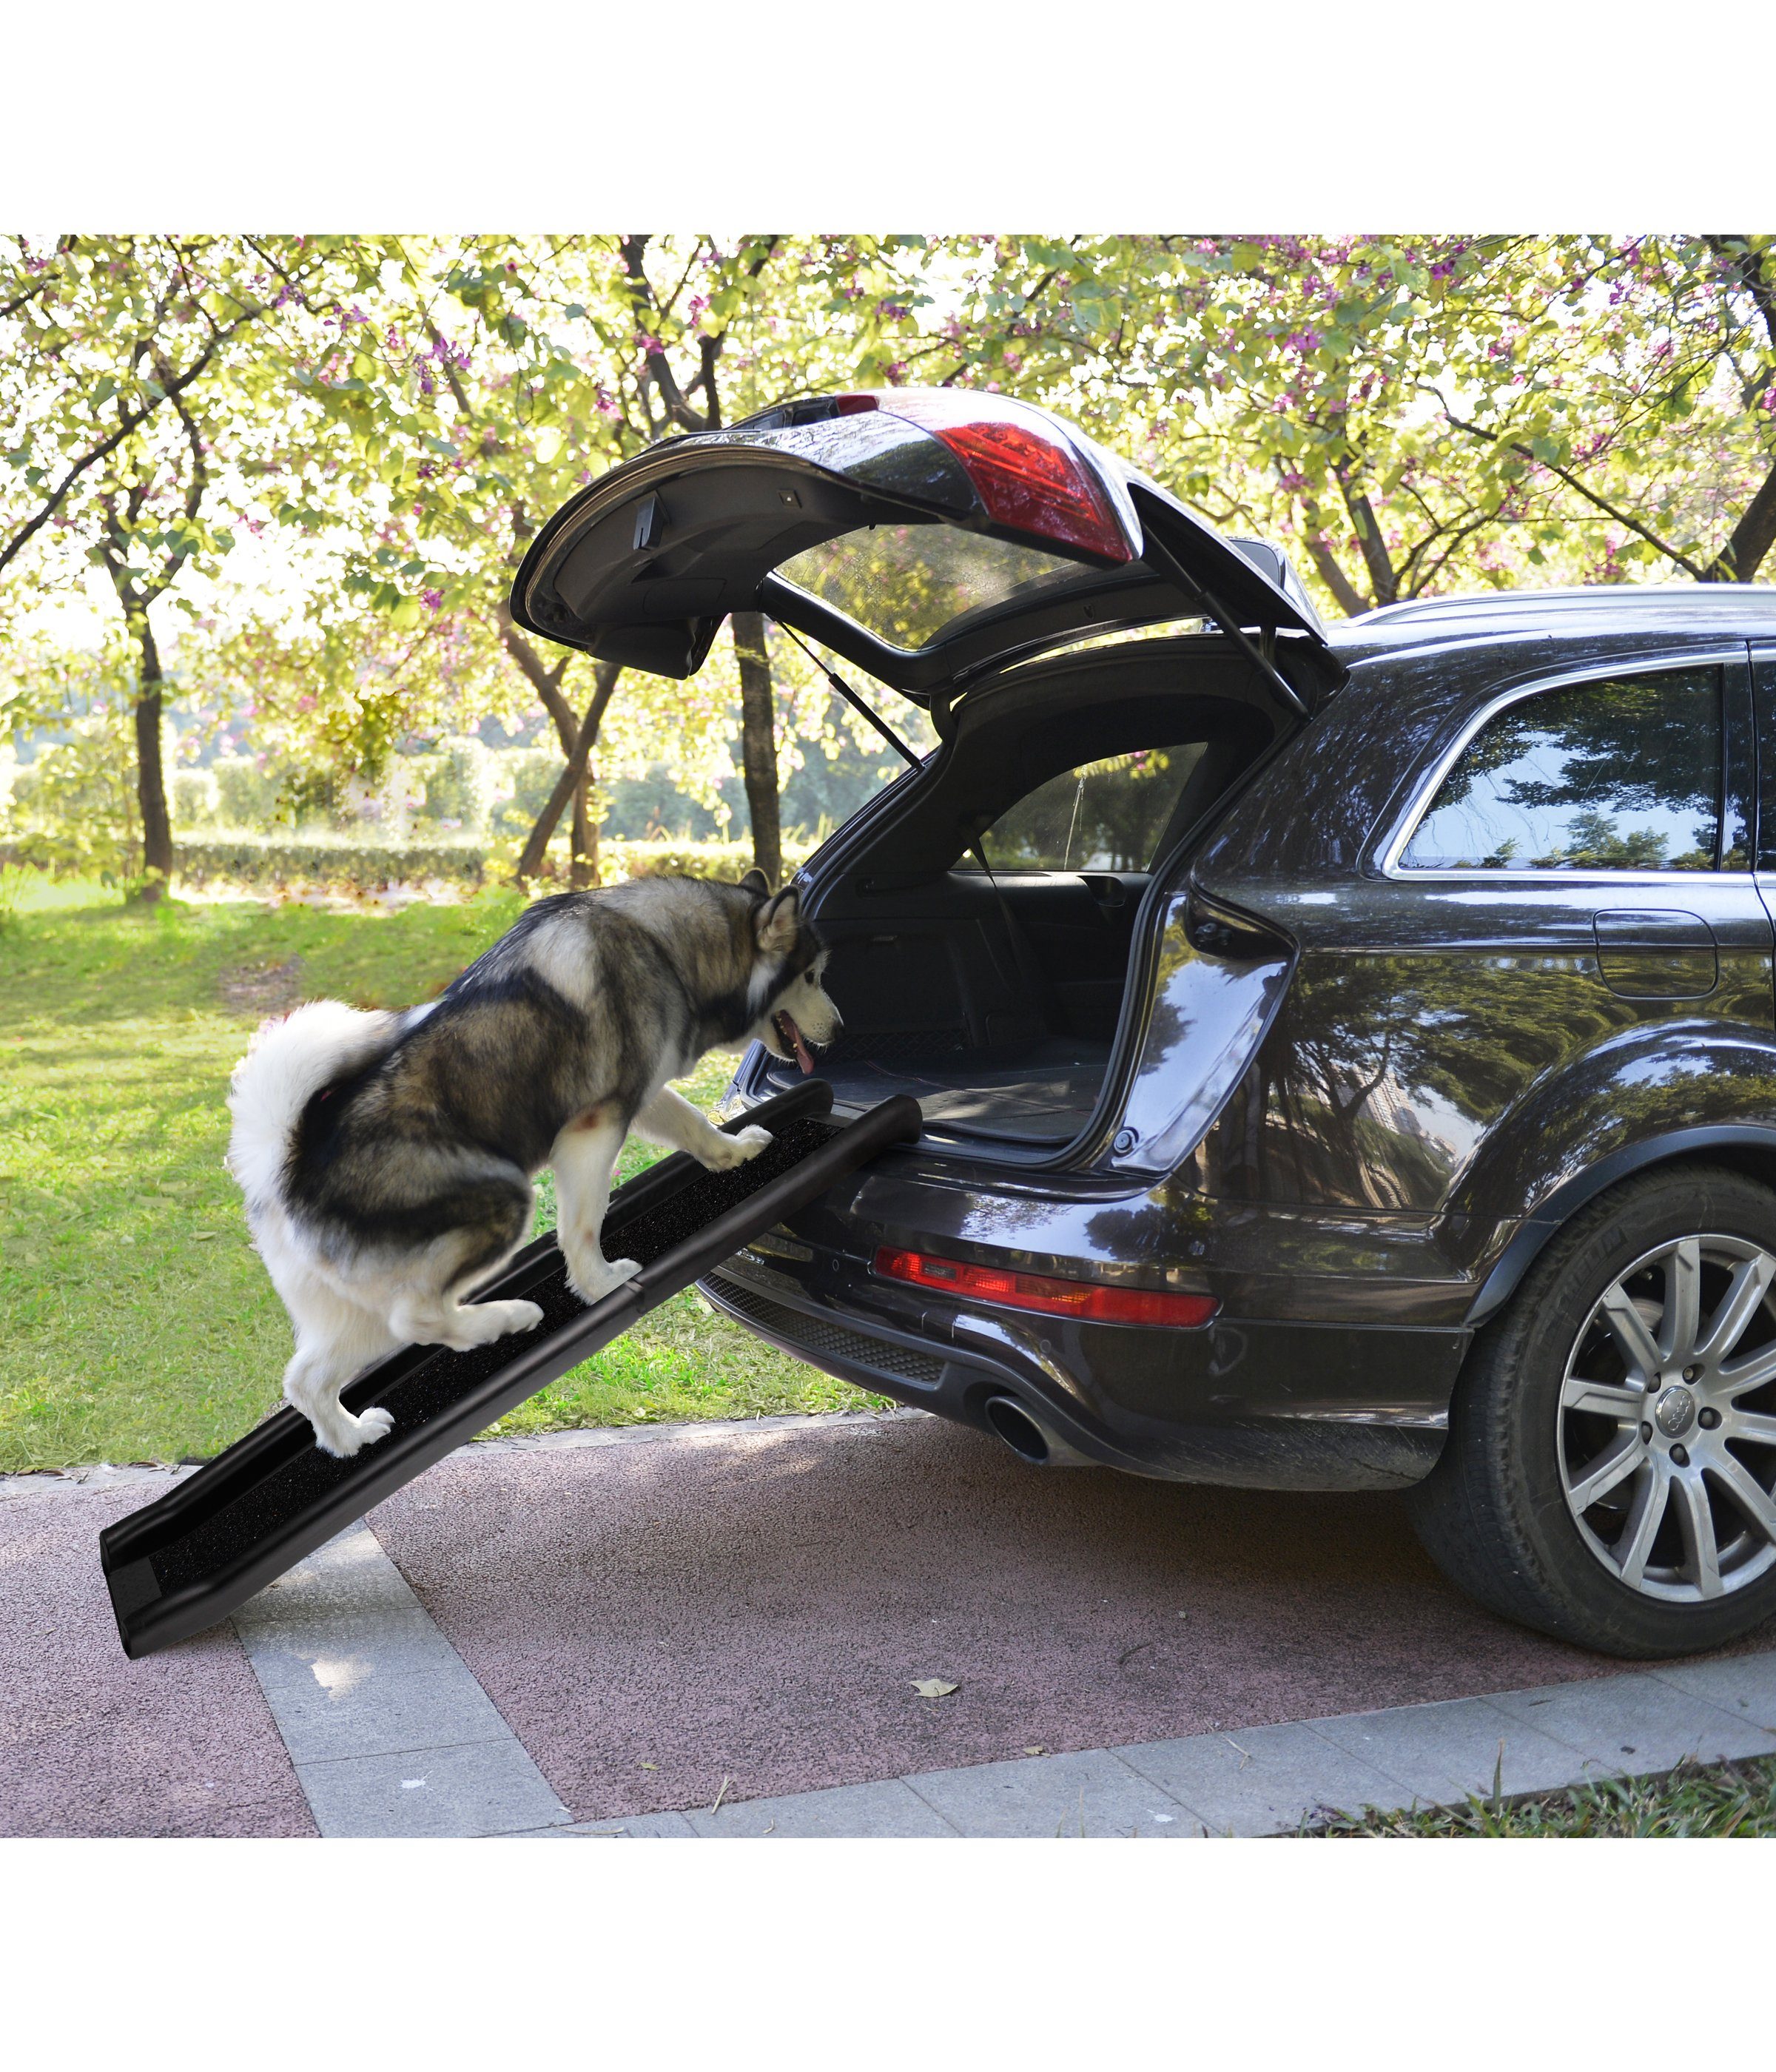 ECENCE Autohundegeschirr 1x Hunde-Gurt Auto Sicherheitsgurt elastisch